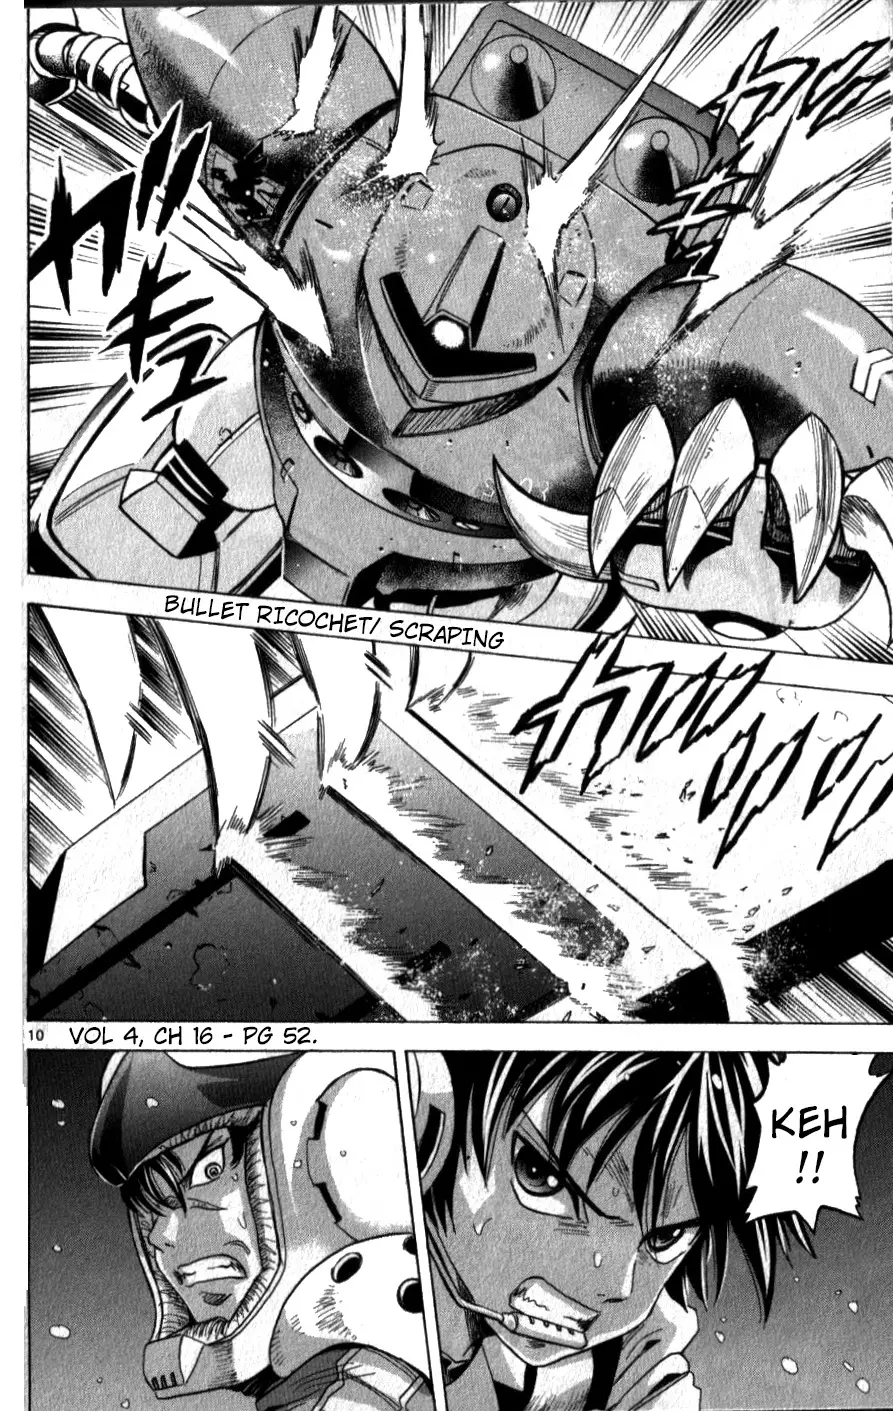 Mobile Suit Gundam Aggressor - 16 page 9-8754449d